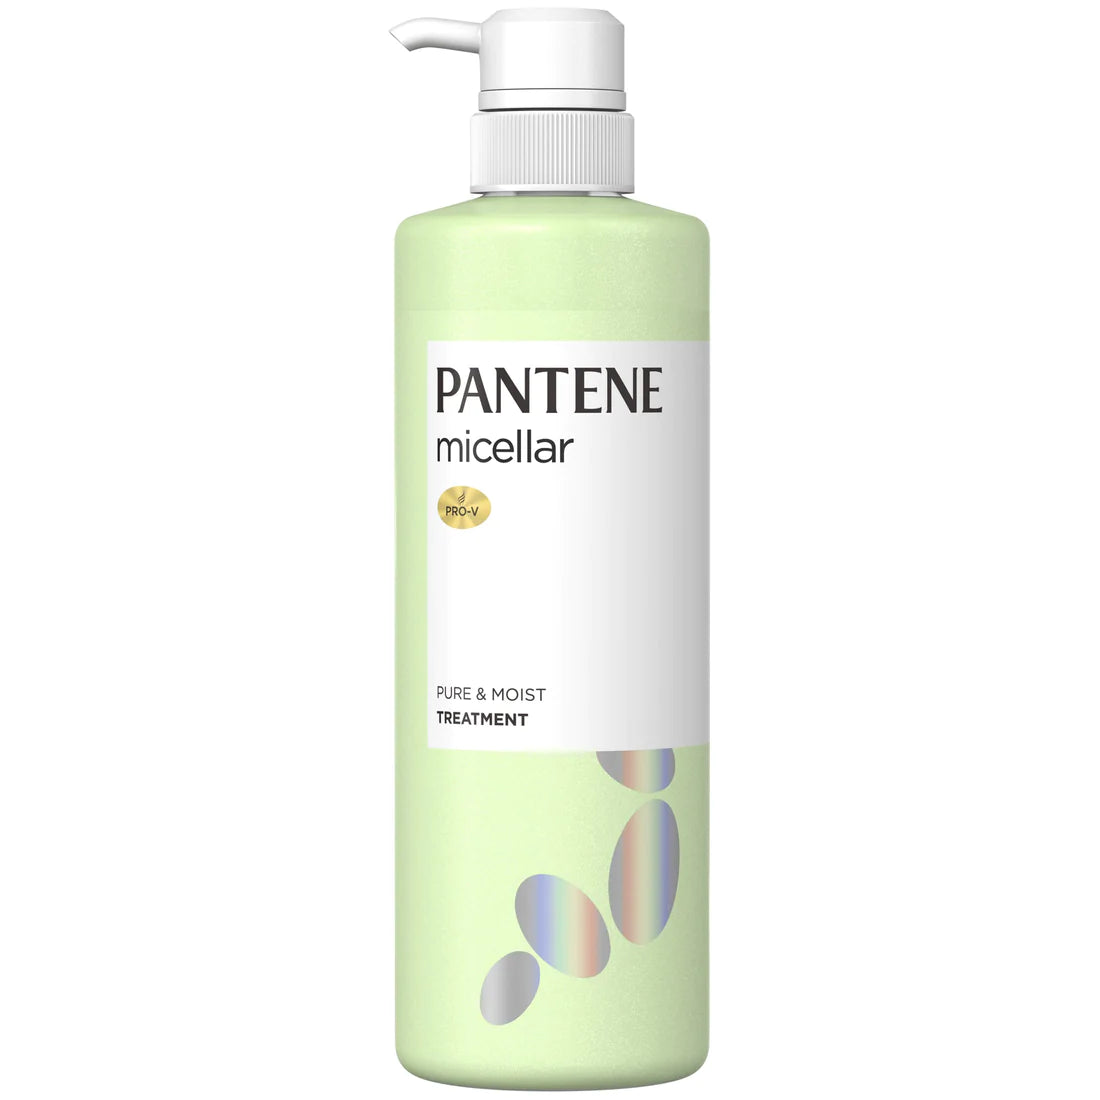 Pantene Micellar Treatment 500ml - Pure & Moist - TODOKU Japan - Japanese Beauty Skin Care and Cosmetics